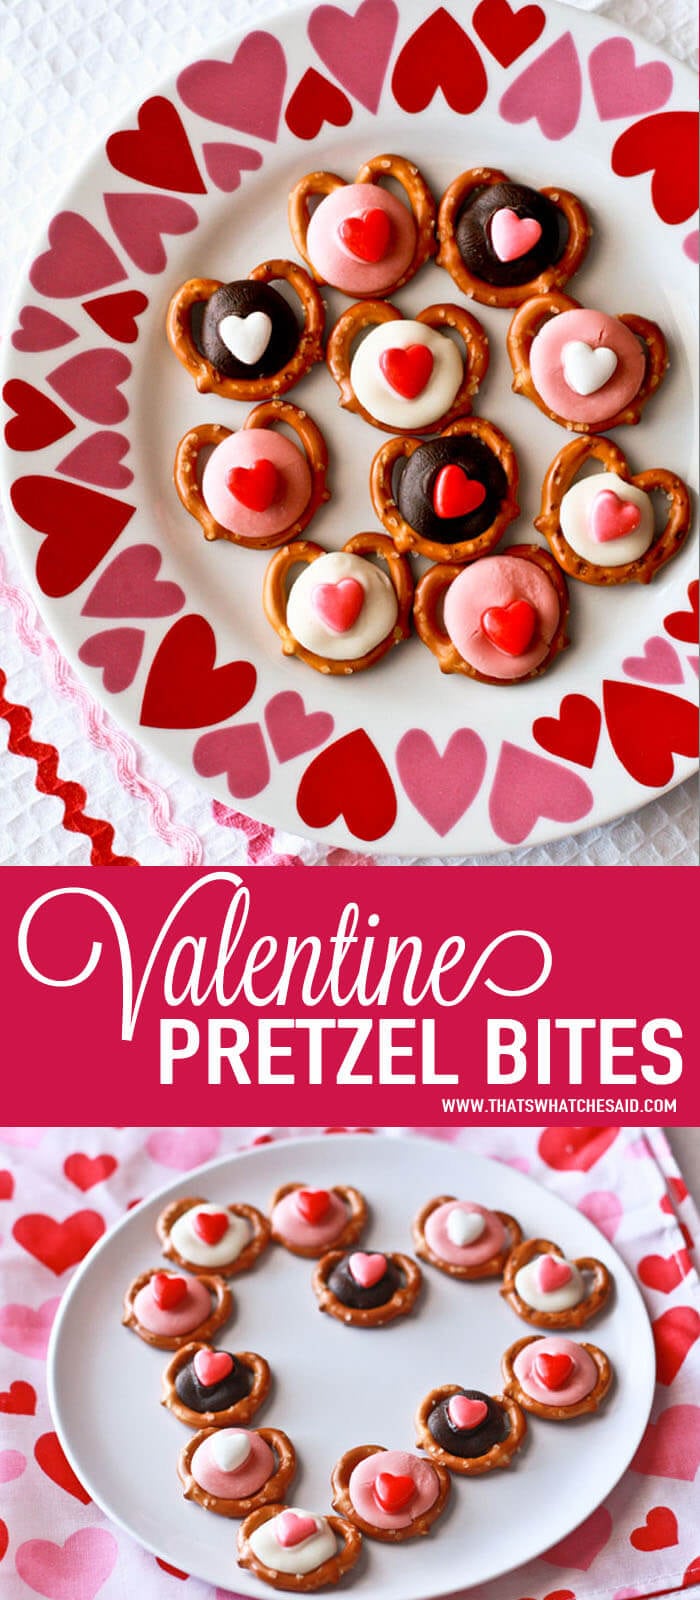 Easy Valentine Pretzel Bites at www.thatswhatchesaid.com